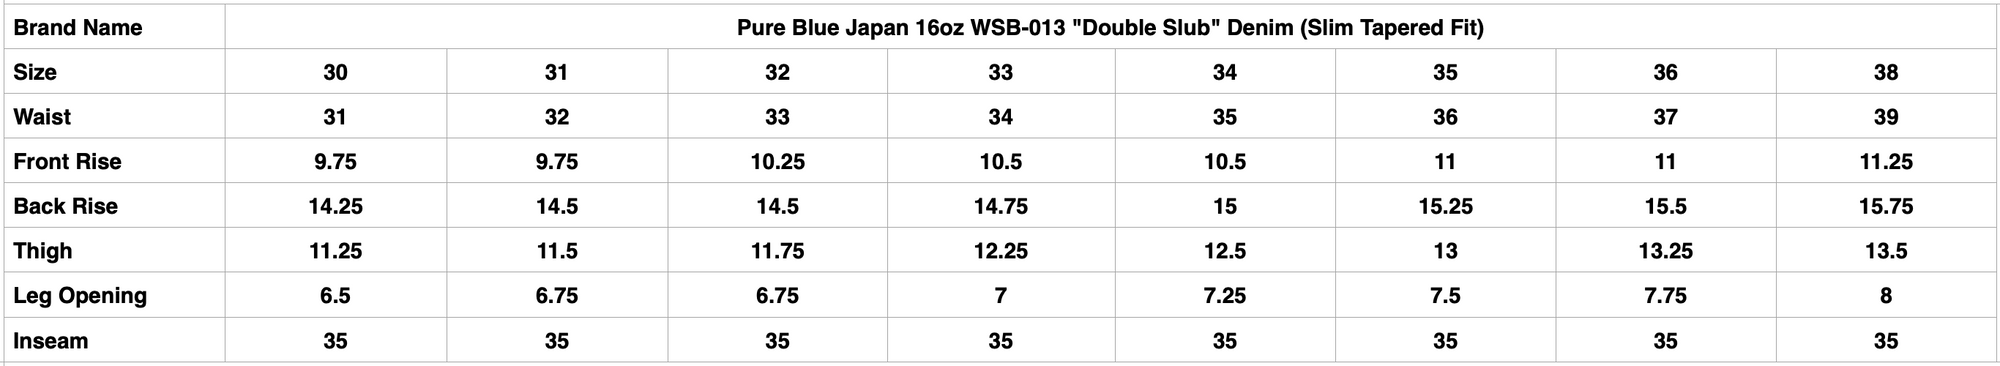 Pure Blue Japan 16oz WSB-013 "Double Slub" Denim (Slim Tapered Fit)